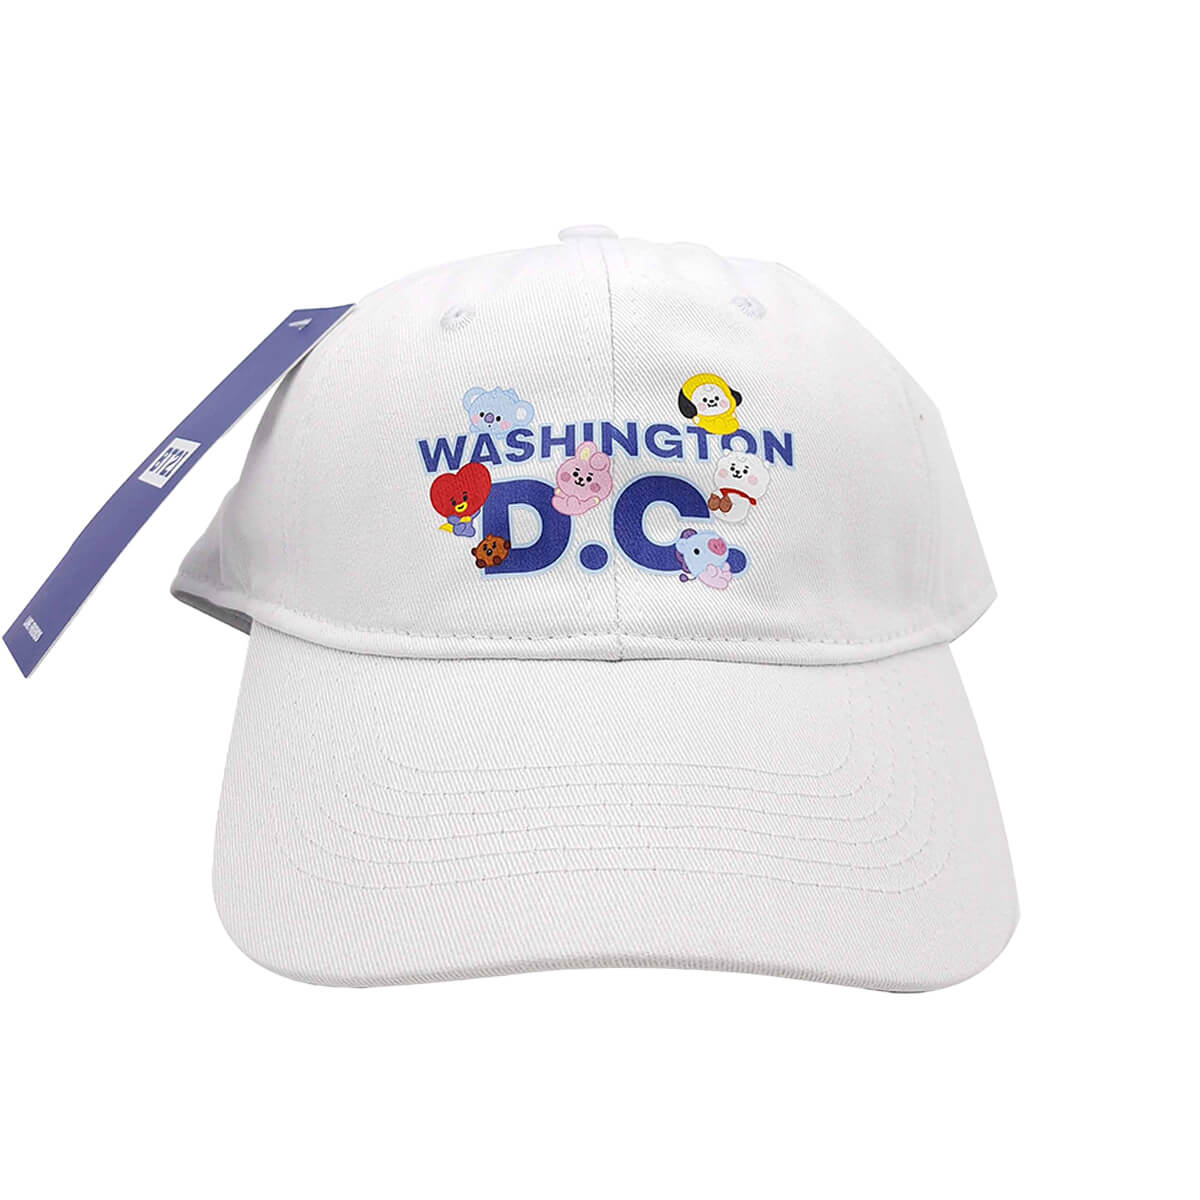 BT21 Washington City Pop-up Cap